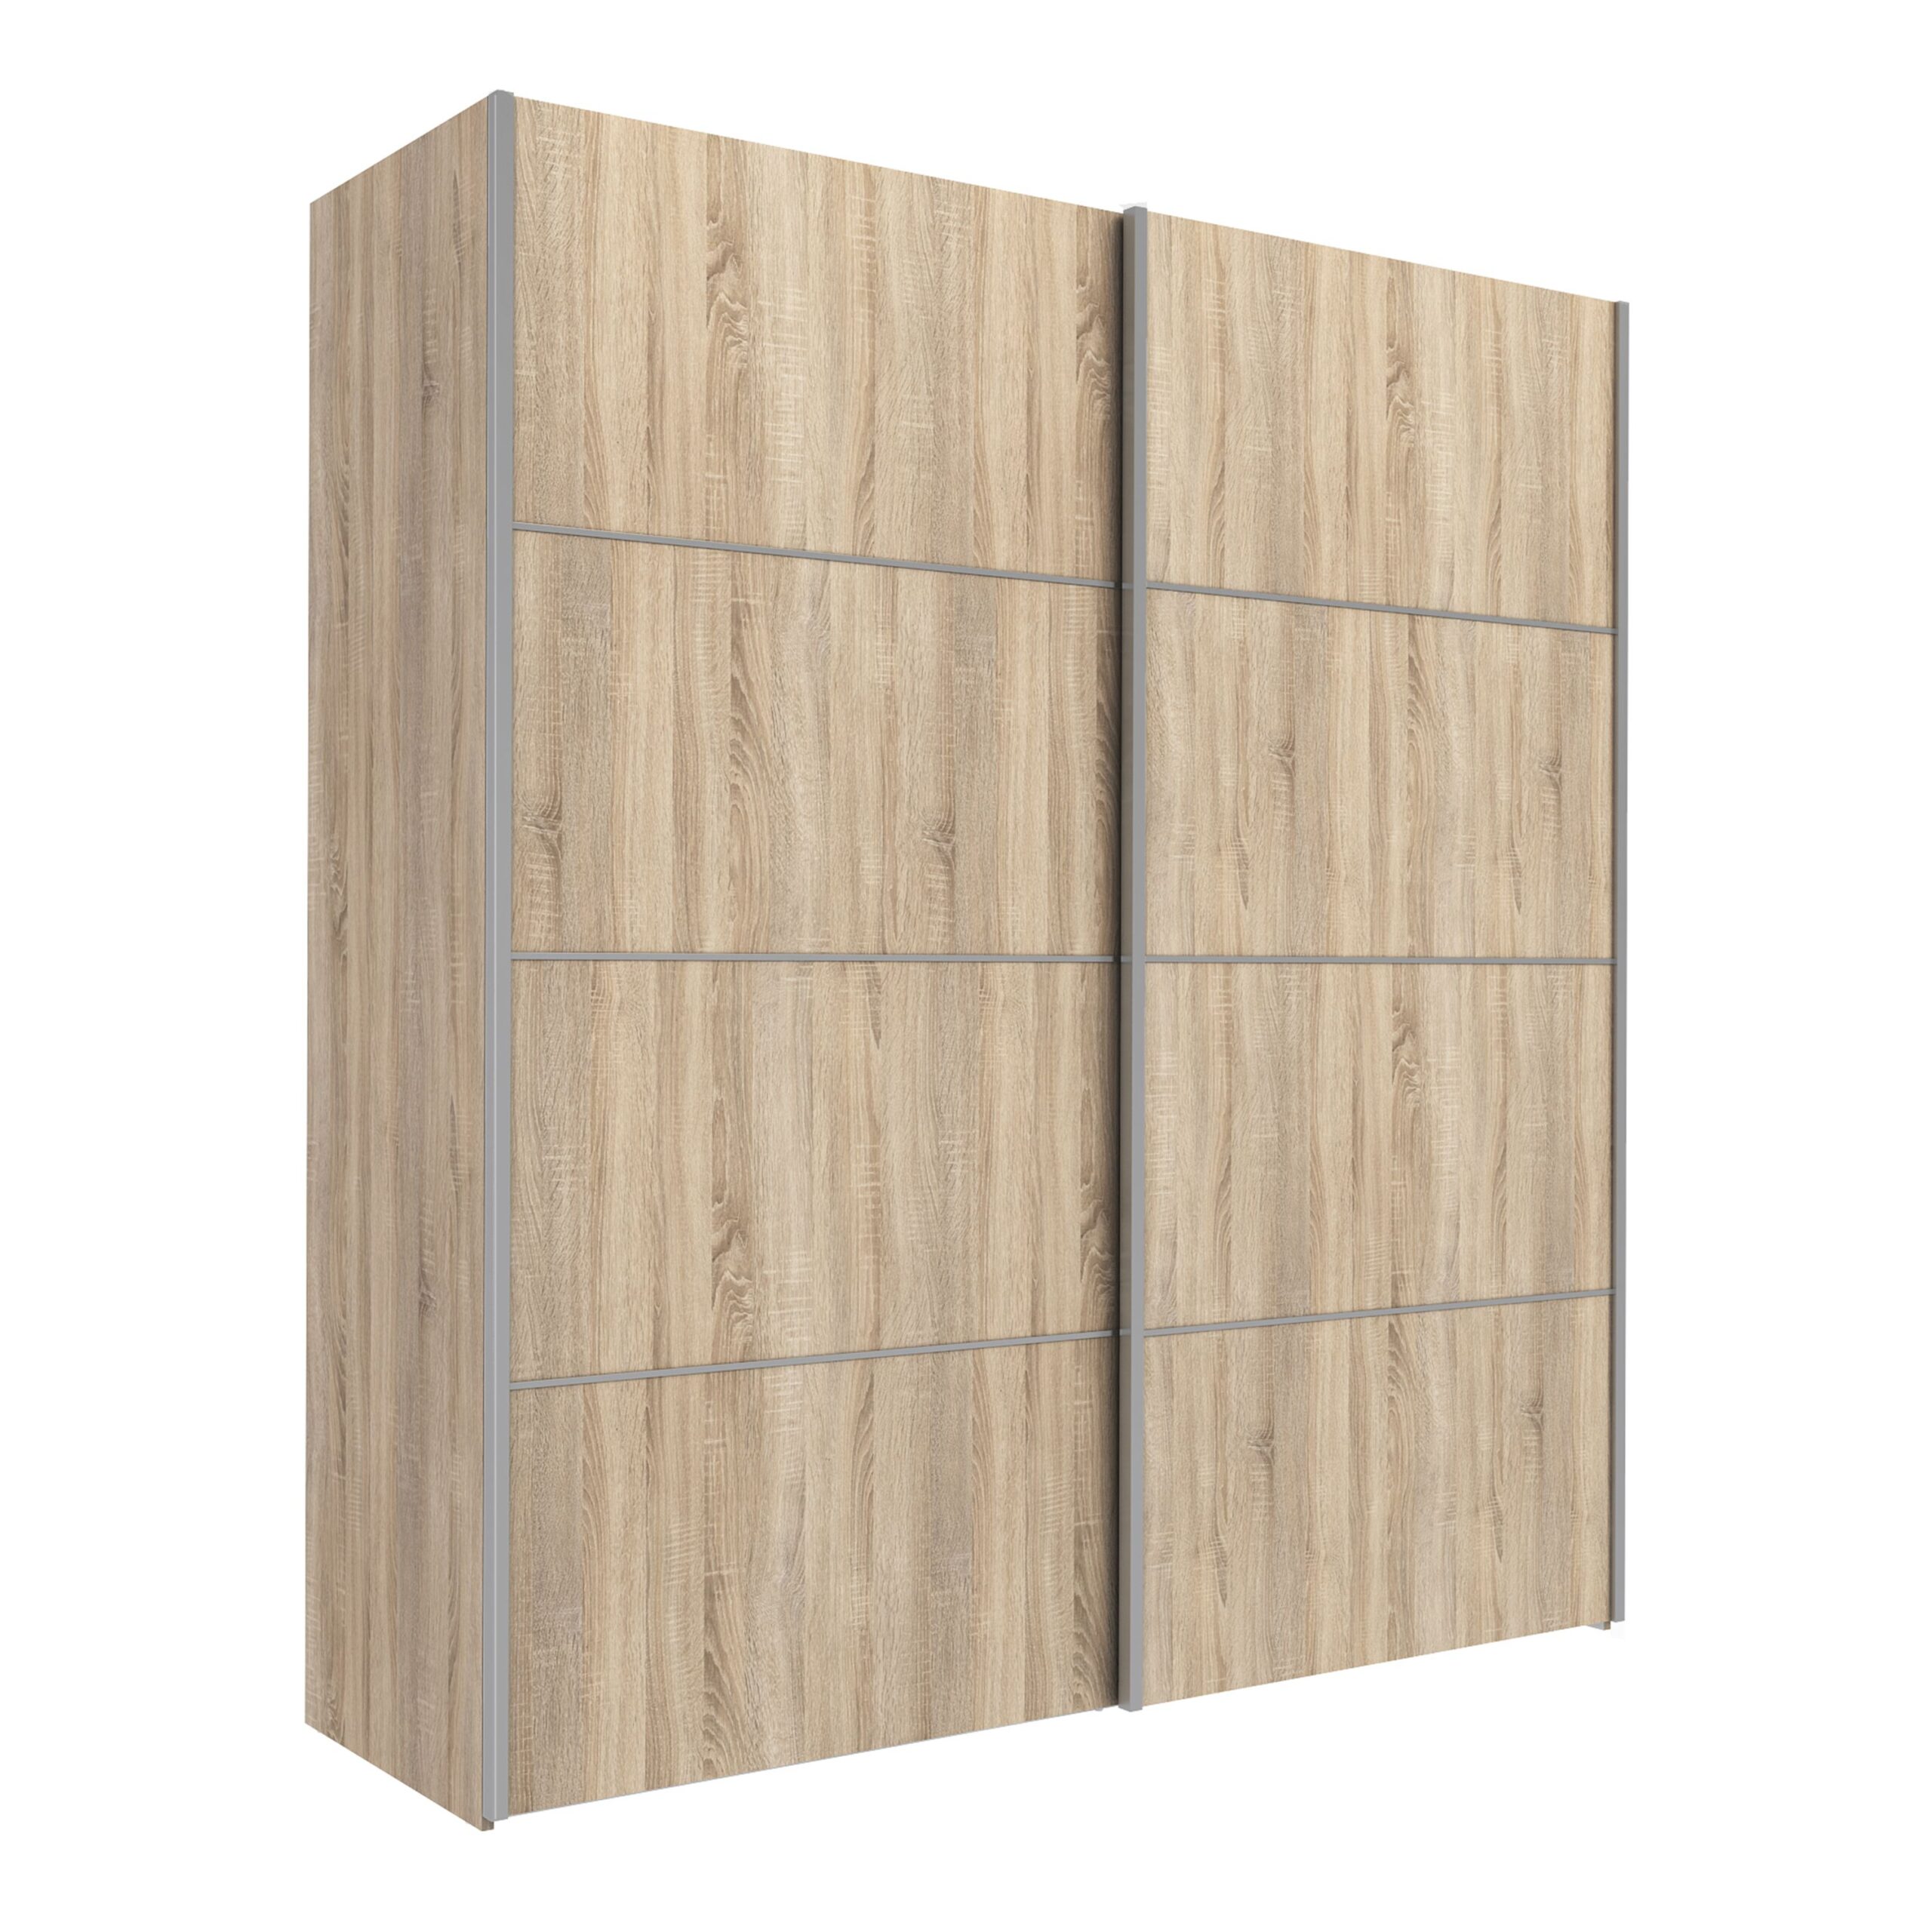 Phillipe 180cm Oak Sliding Wardrobe - Oak Doors